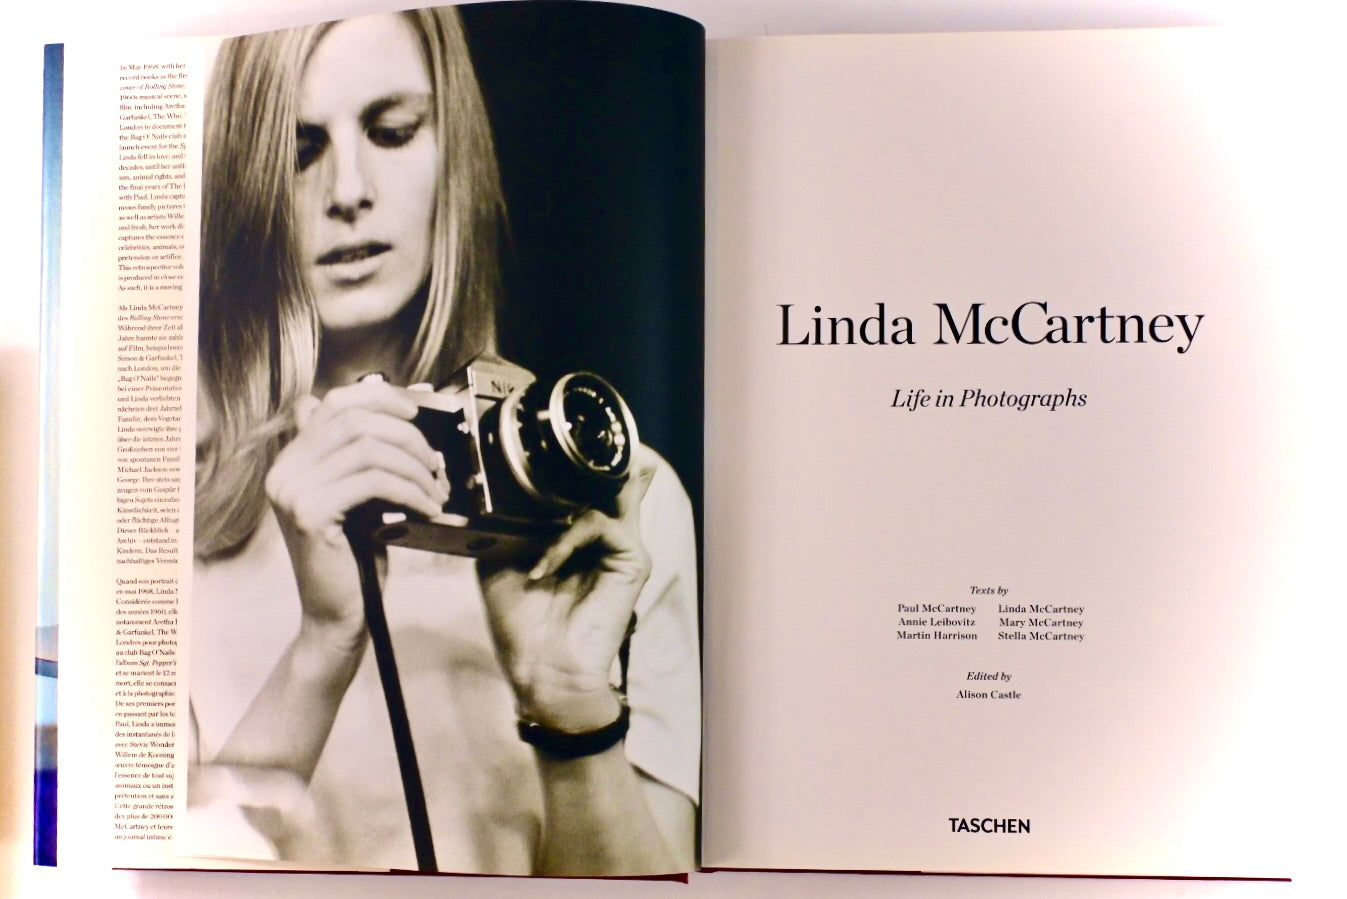 CASTLE, Alison, ed. Linda McCartney: Life in Photographs.